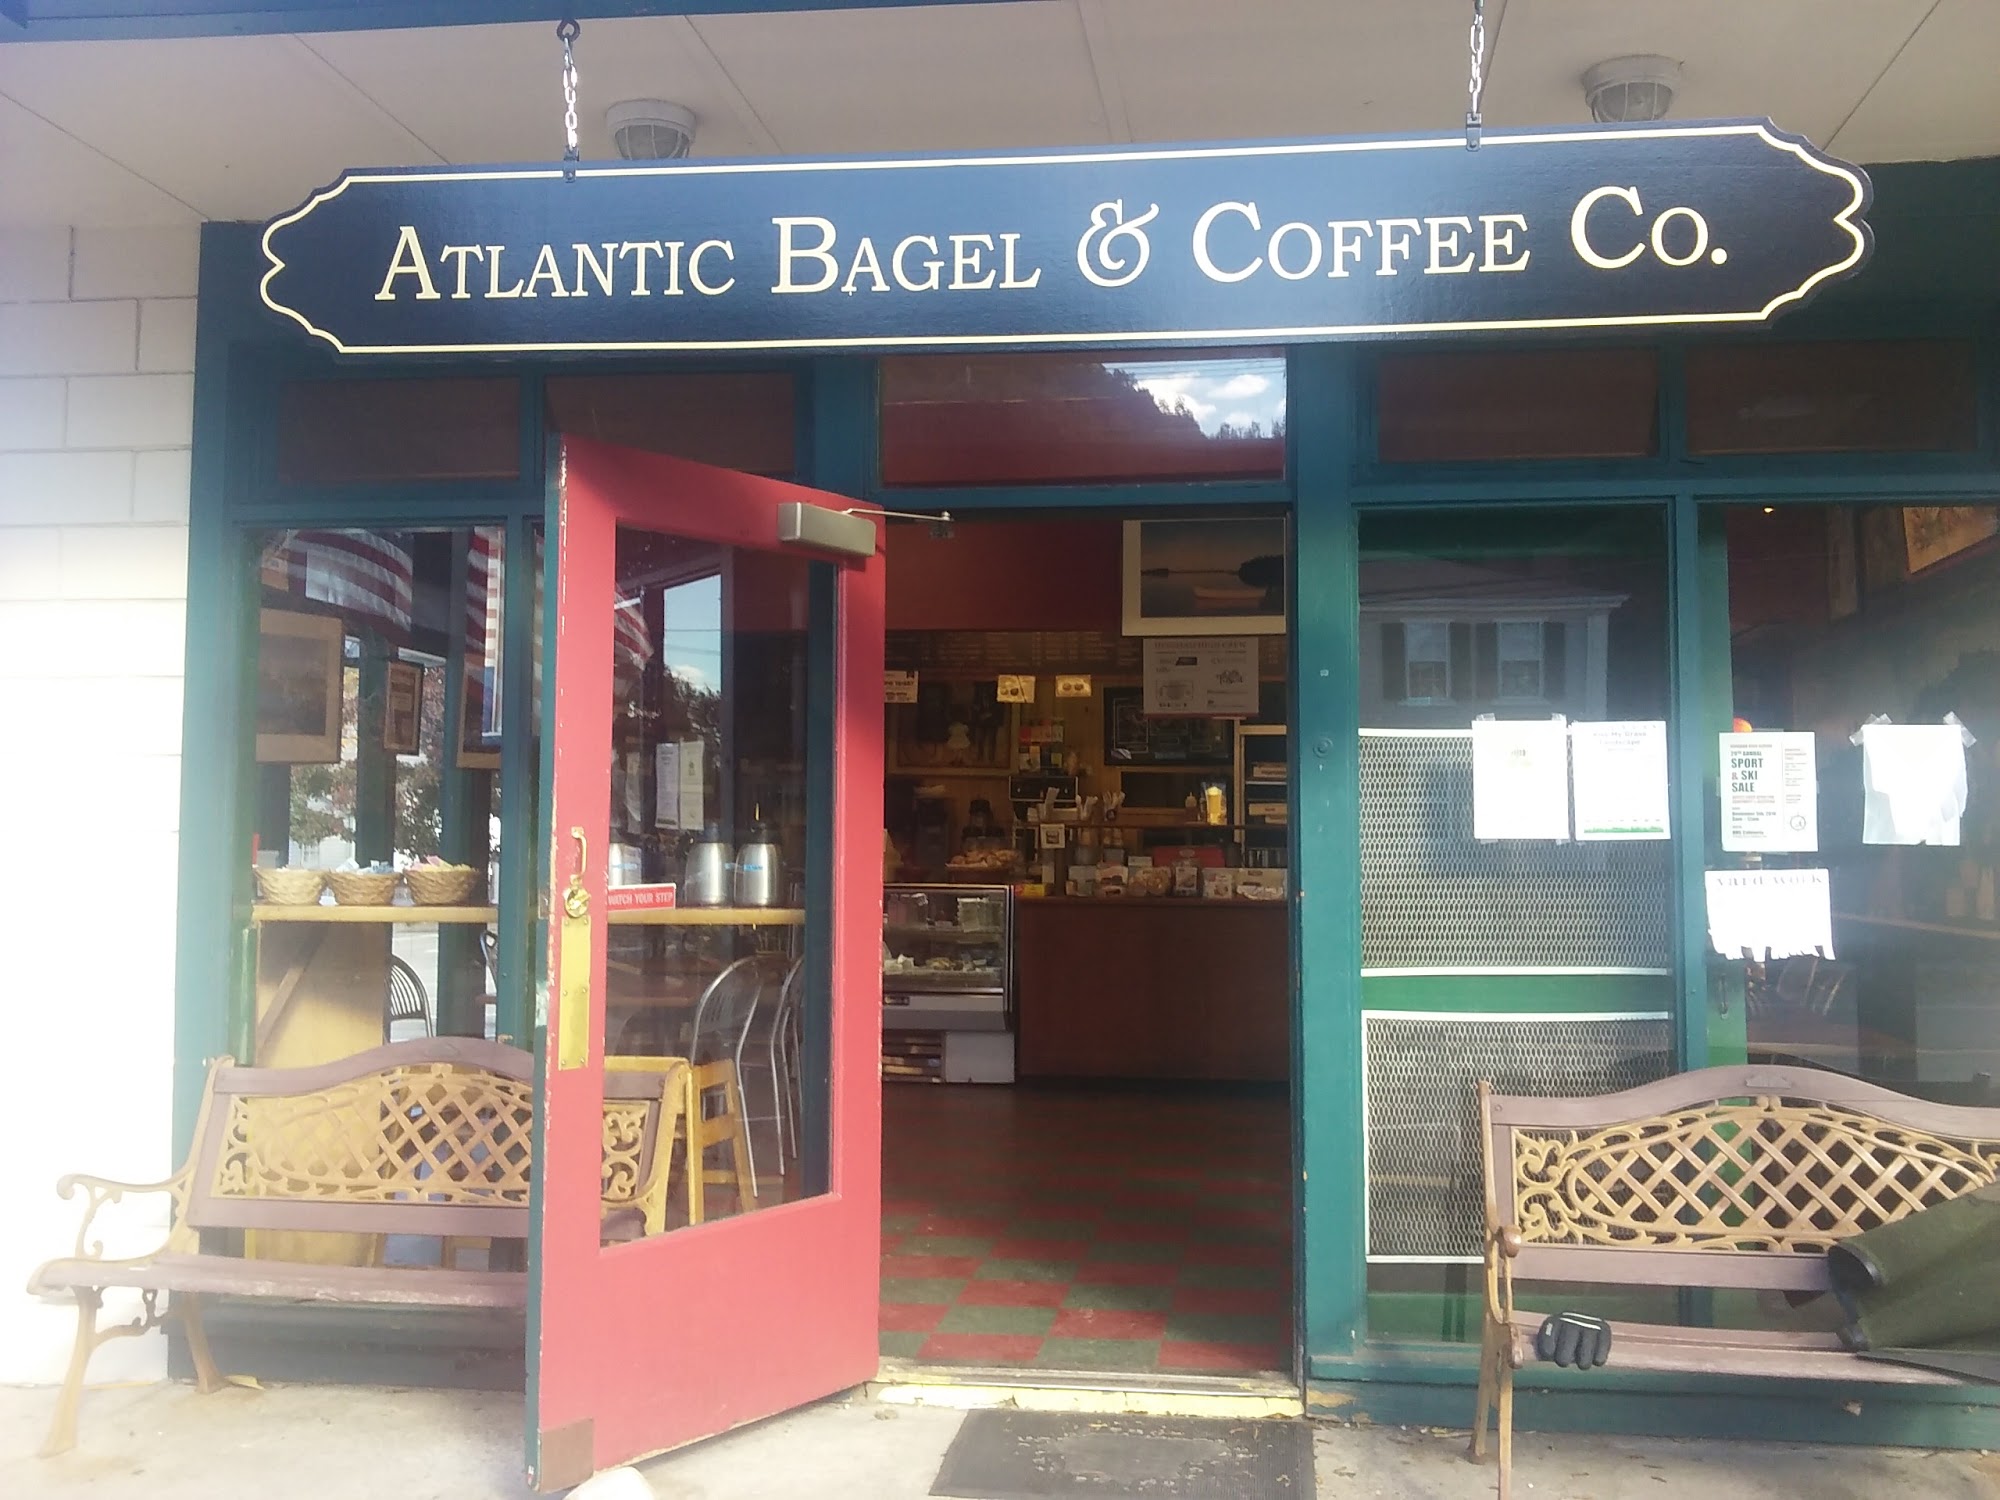 Atlantic Bagel & Coffee Co